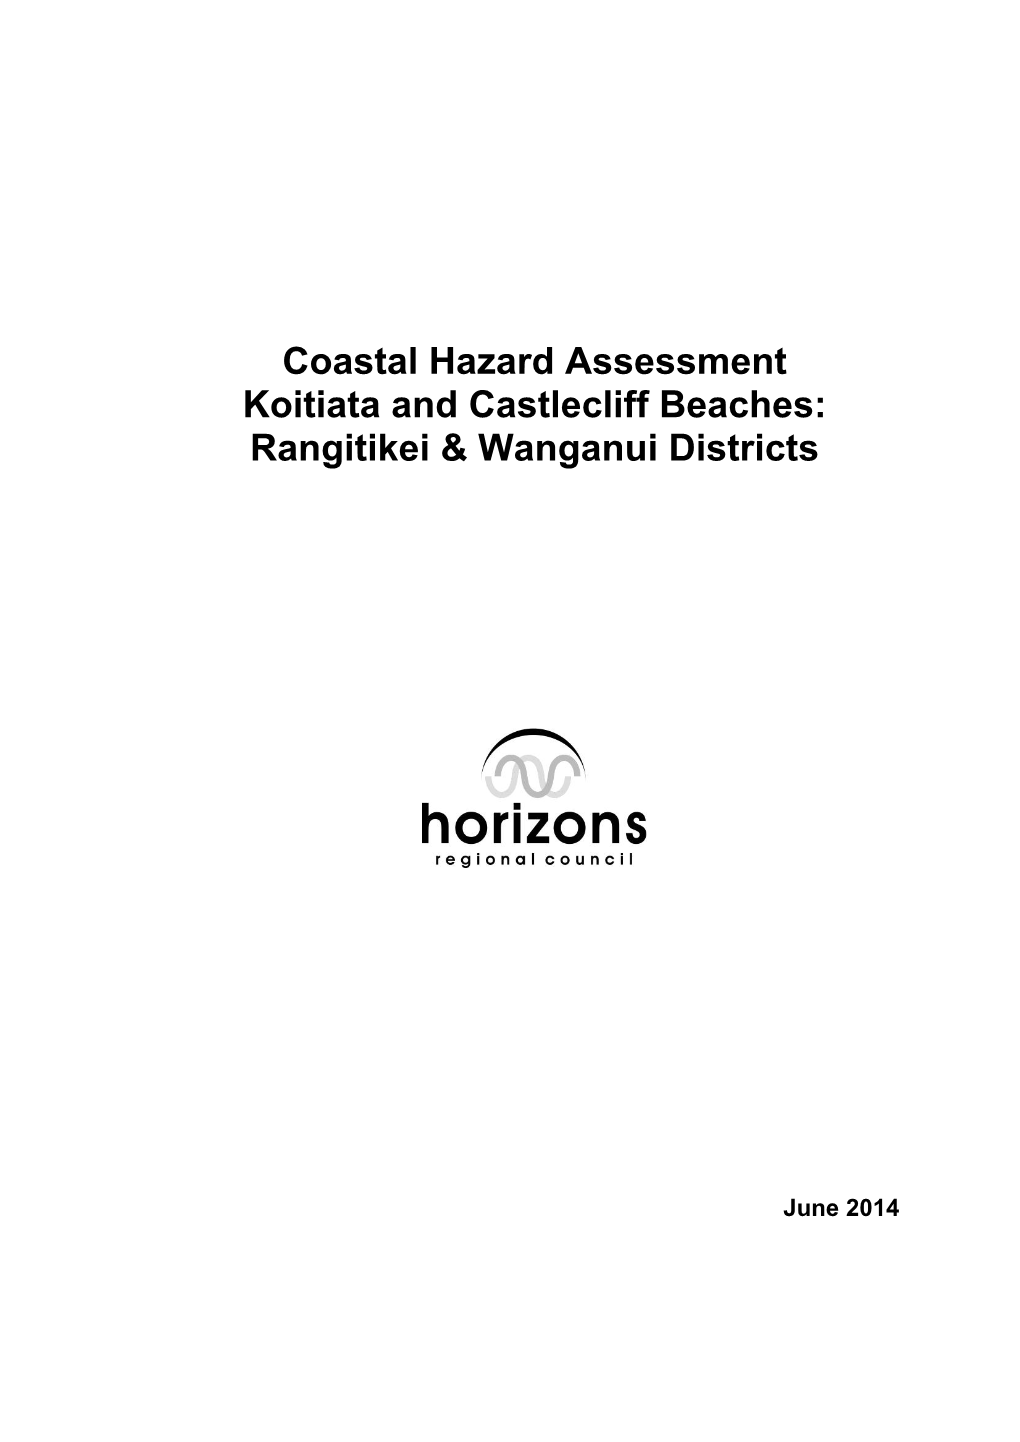 Coastal Hazard Assessment Koitiata and Castlecliff Beaches: Rangitikei & Wanganui Districts